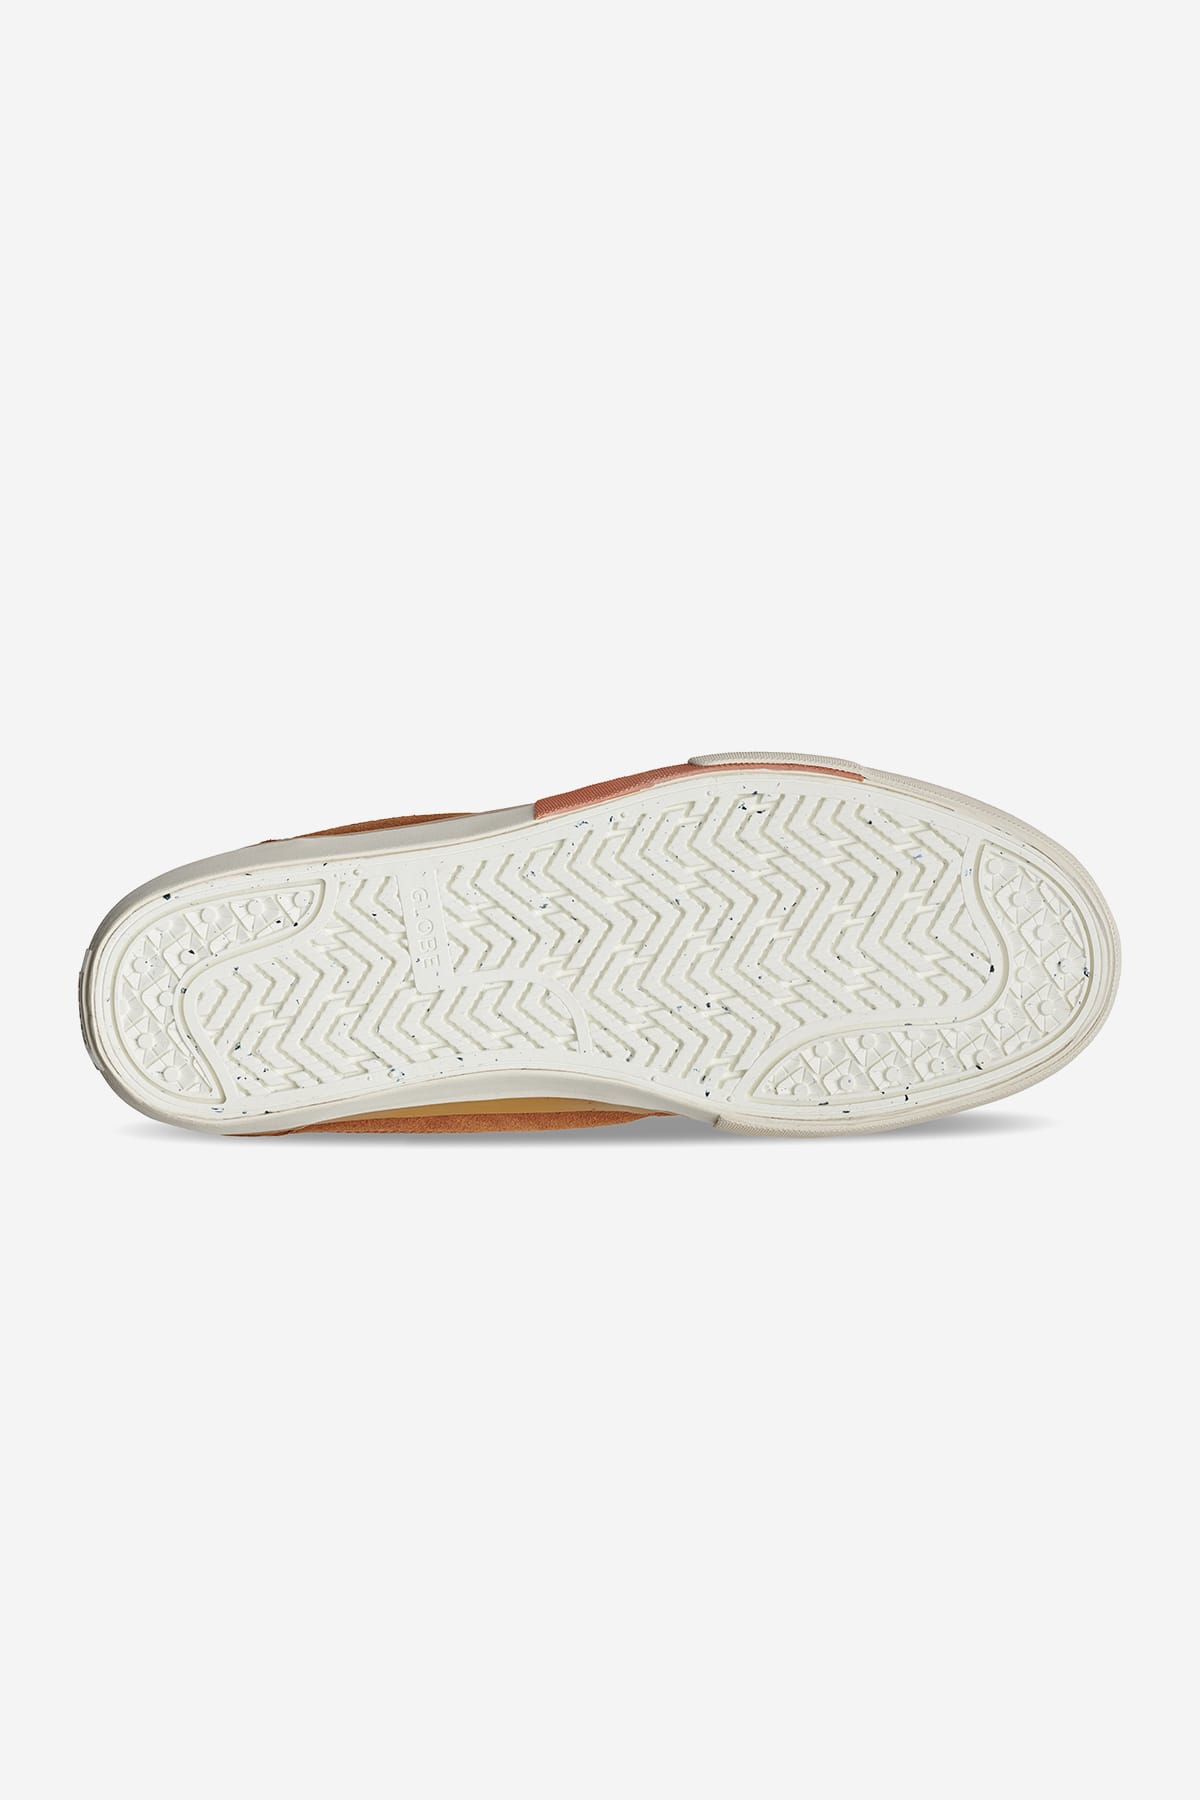 Globe - Mahalo Plus - Pecan/Antique - skateboard Zapatos